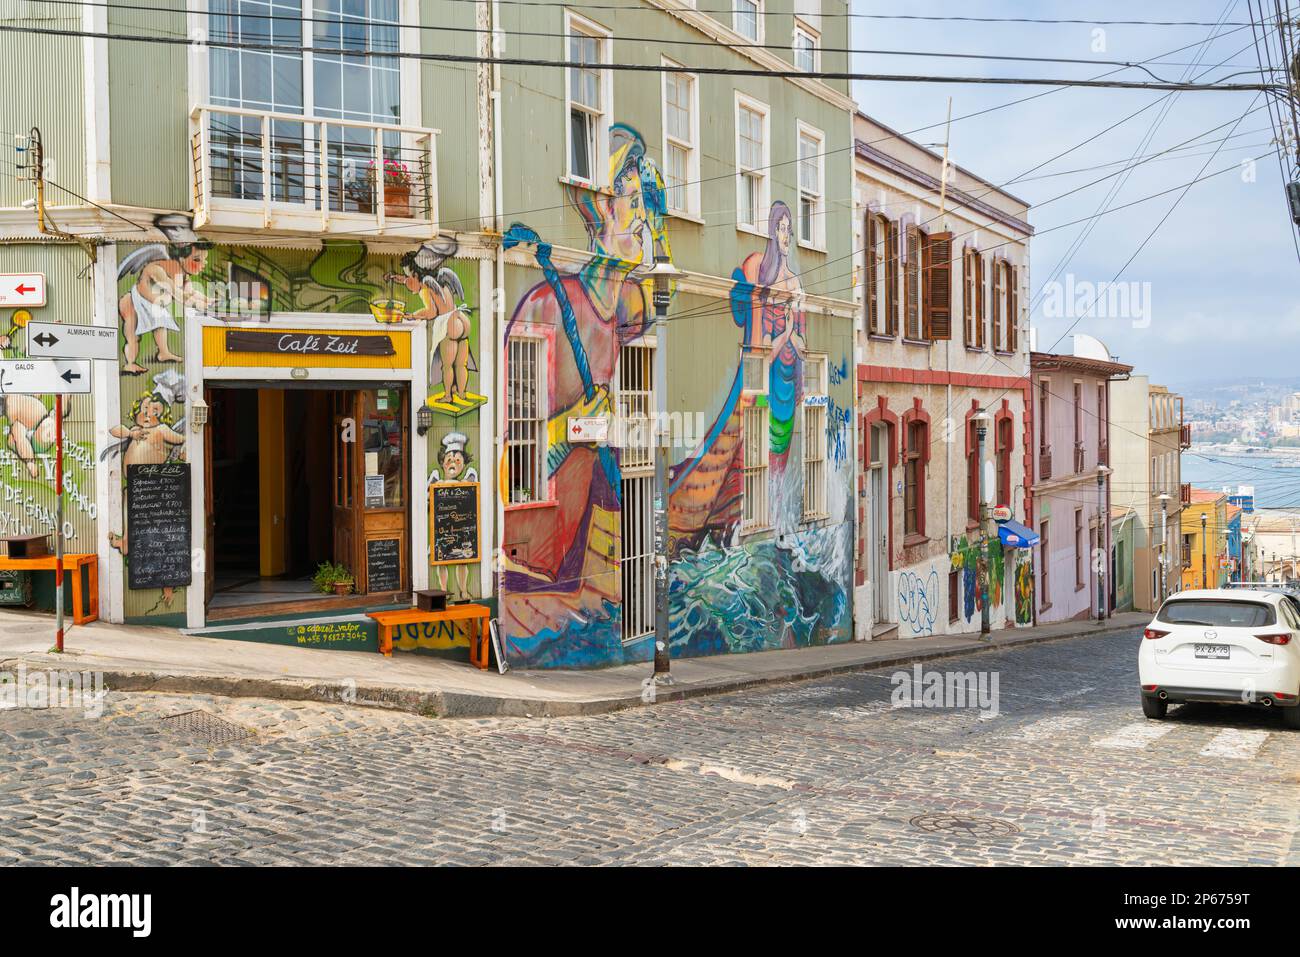 Painted mural of cafe, Cerro Alegre, Valparaiso, Chile, South America Stock Photo